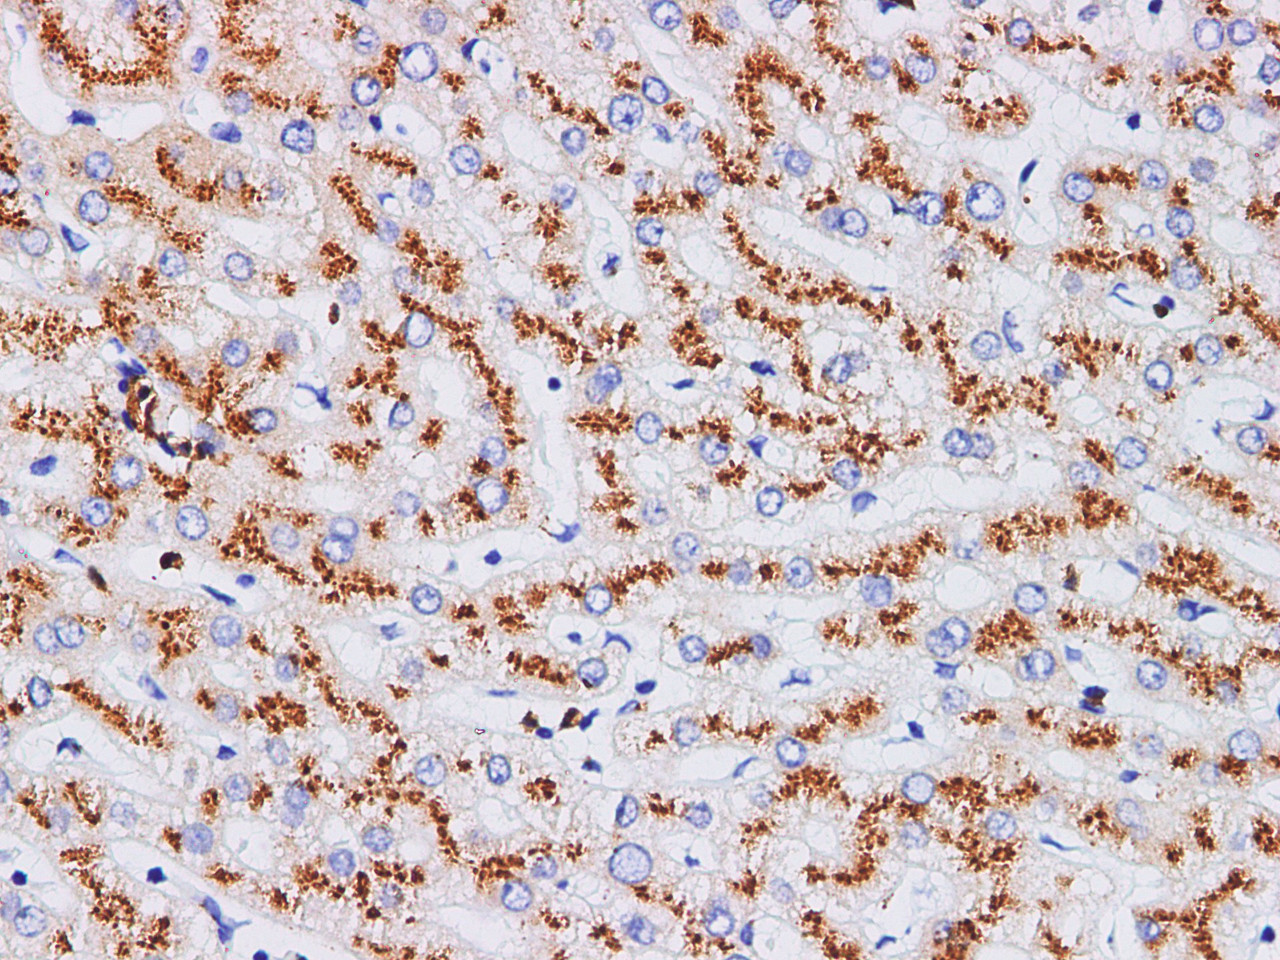 https://file.elabscience.com//image/antibody/EA/E-AB-40311-IHC04.jpg